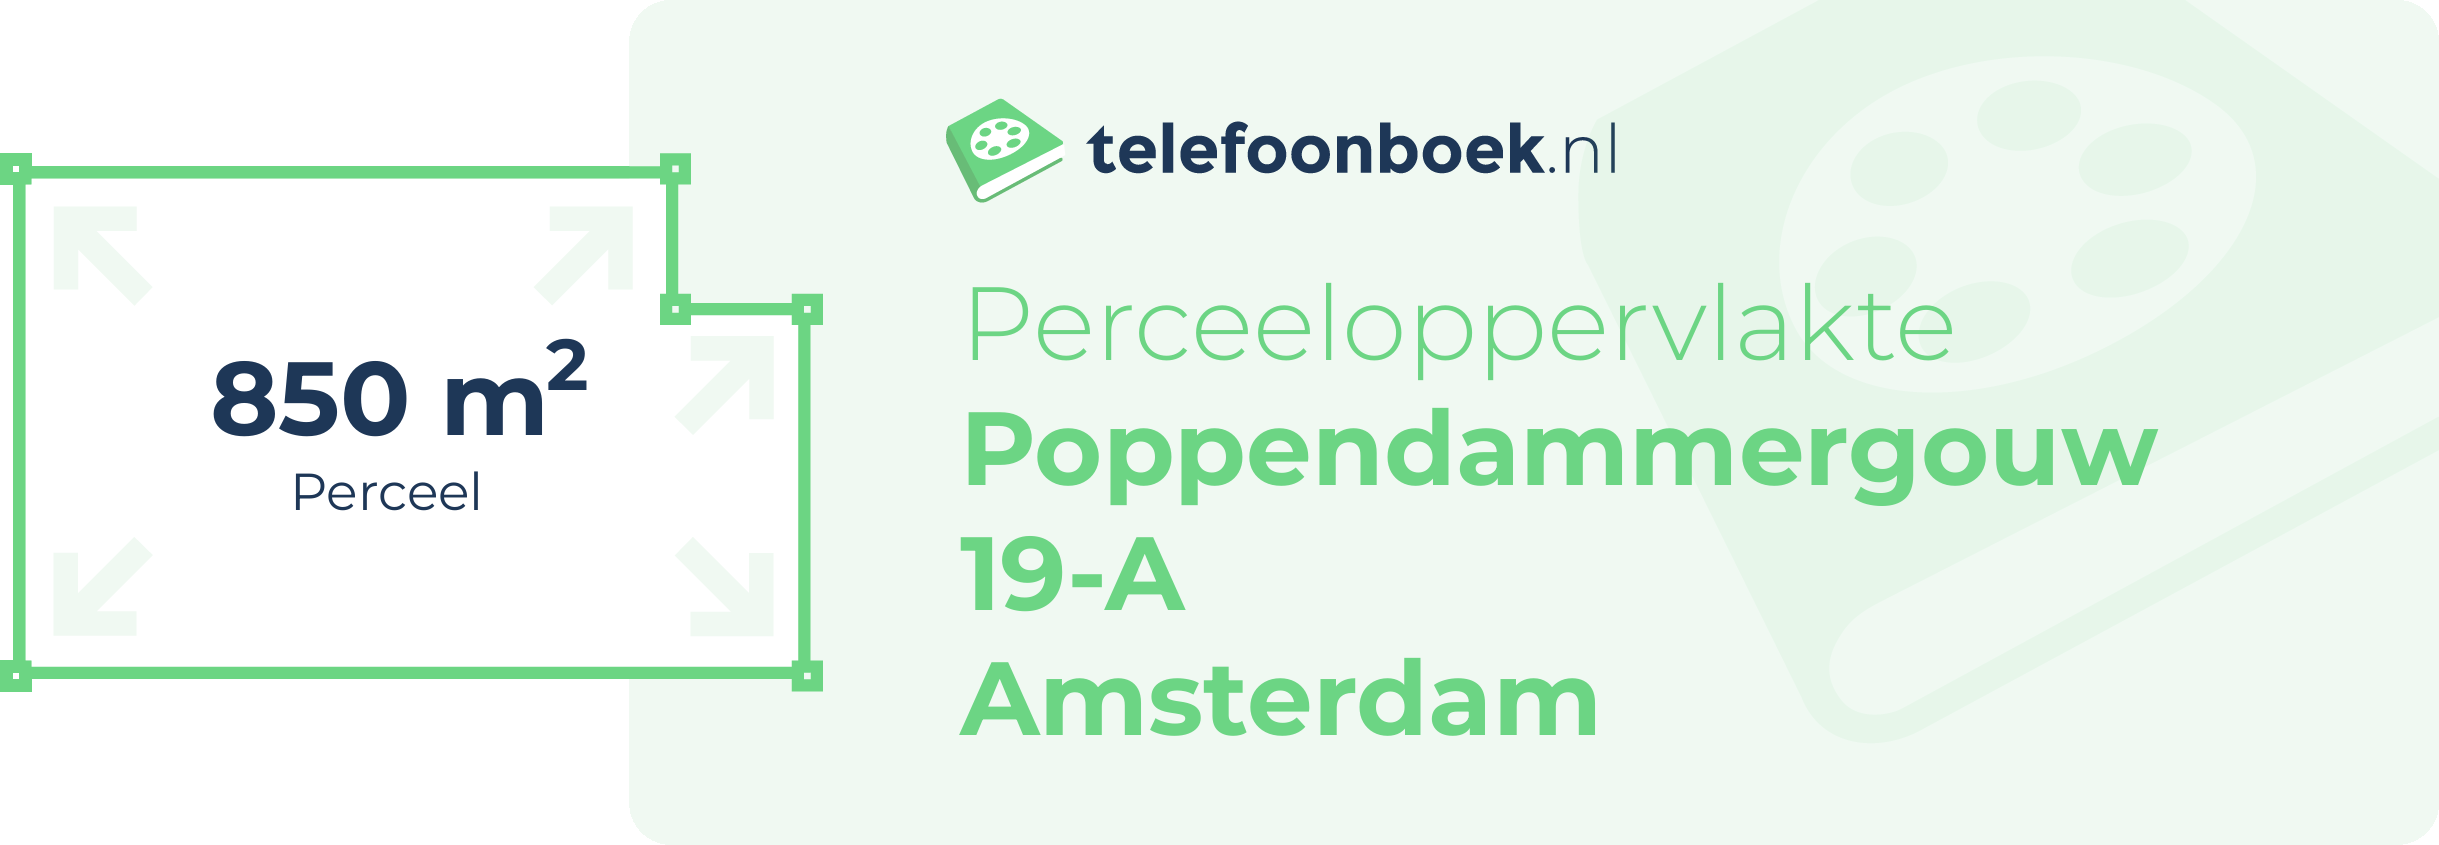 Perceeloppervlakte Poppendammergouw 19-A Amsterdam